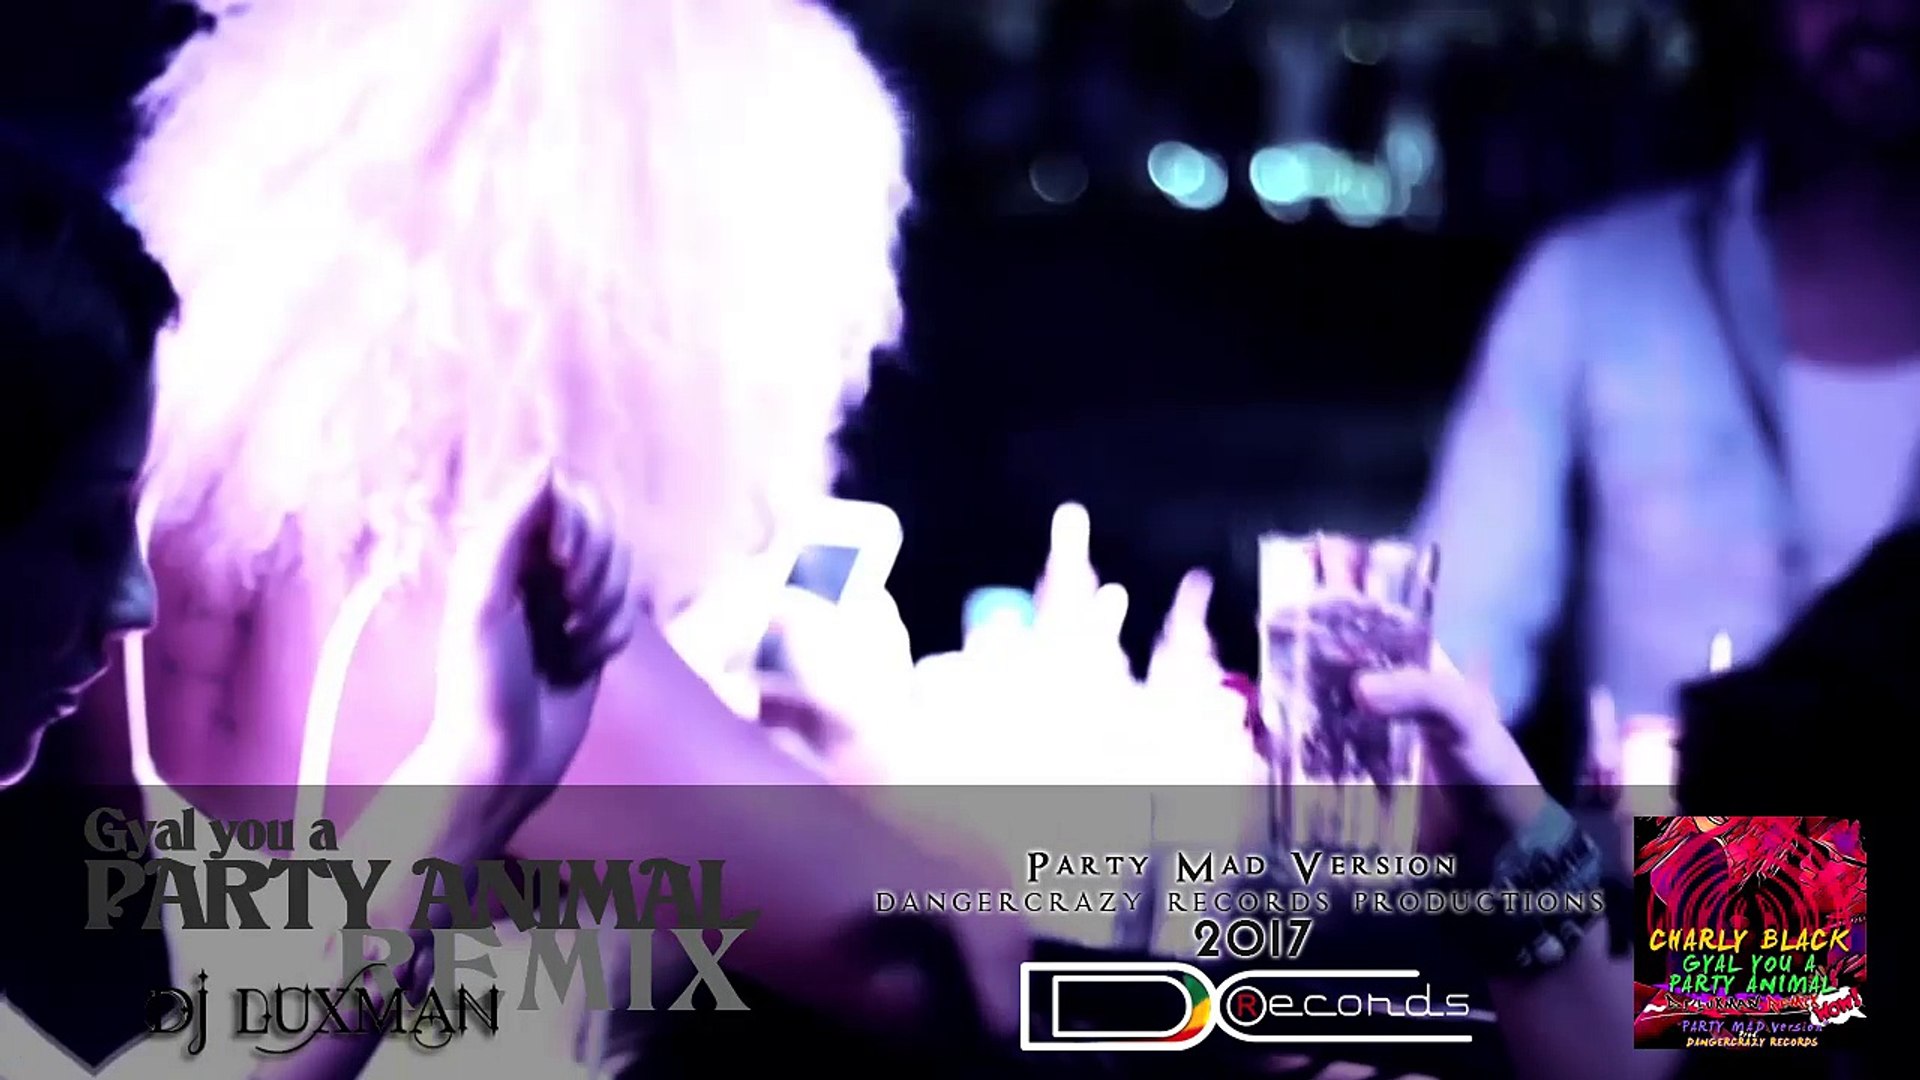 Charly Black - Gyal You A Party Animal (Dj LuXMan Remix) [Party Mad Version  prod. DANGERCRAZY RECORDS] (April 2017) - Video Dailymotion